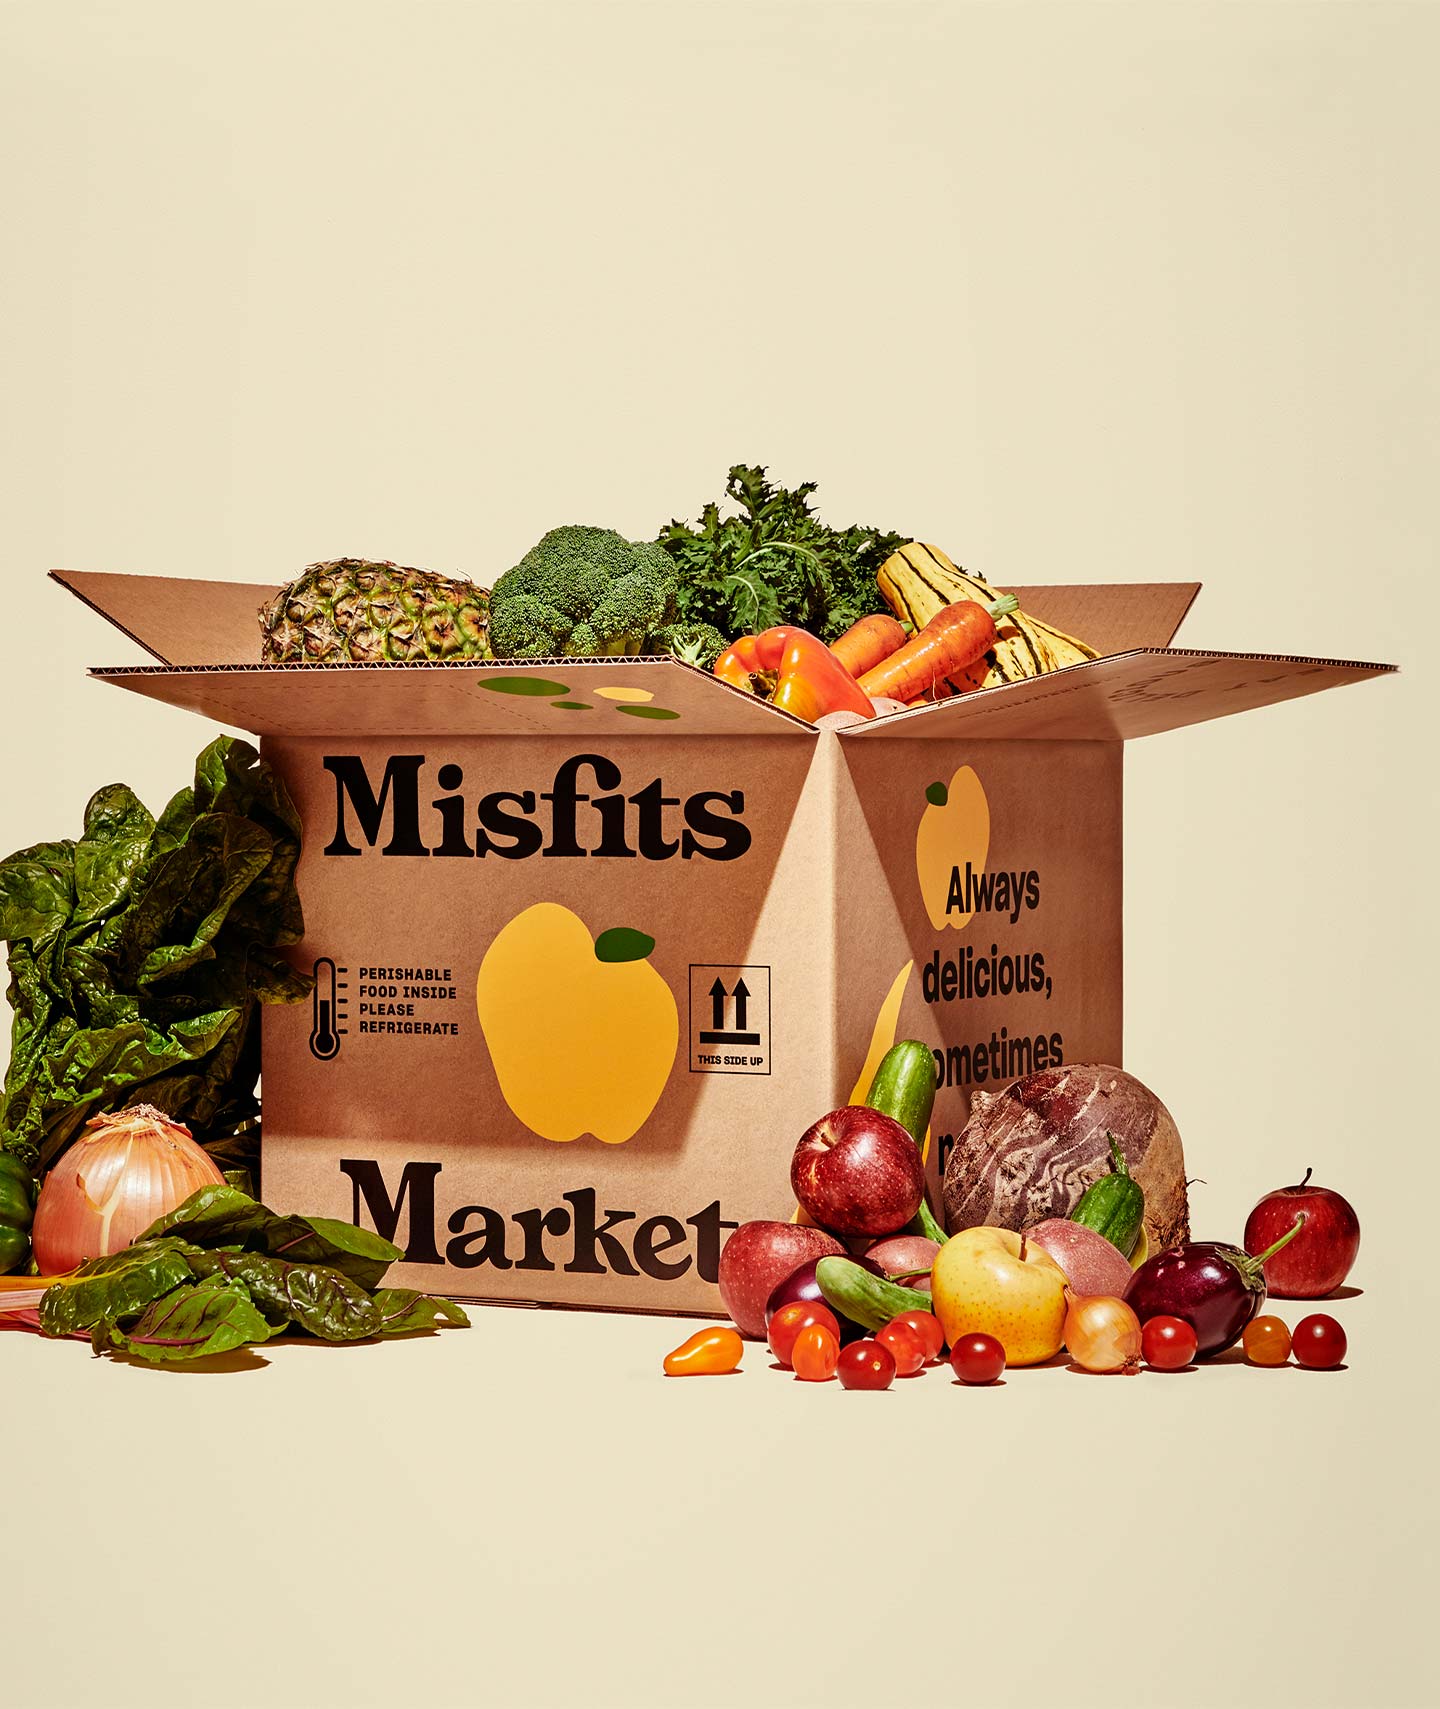 Misfits Market subscription box review